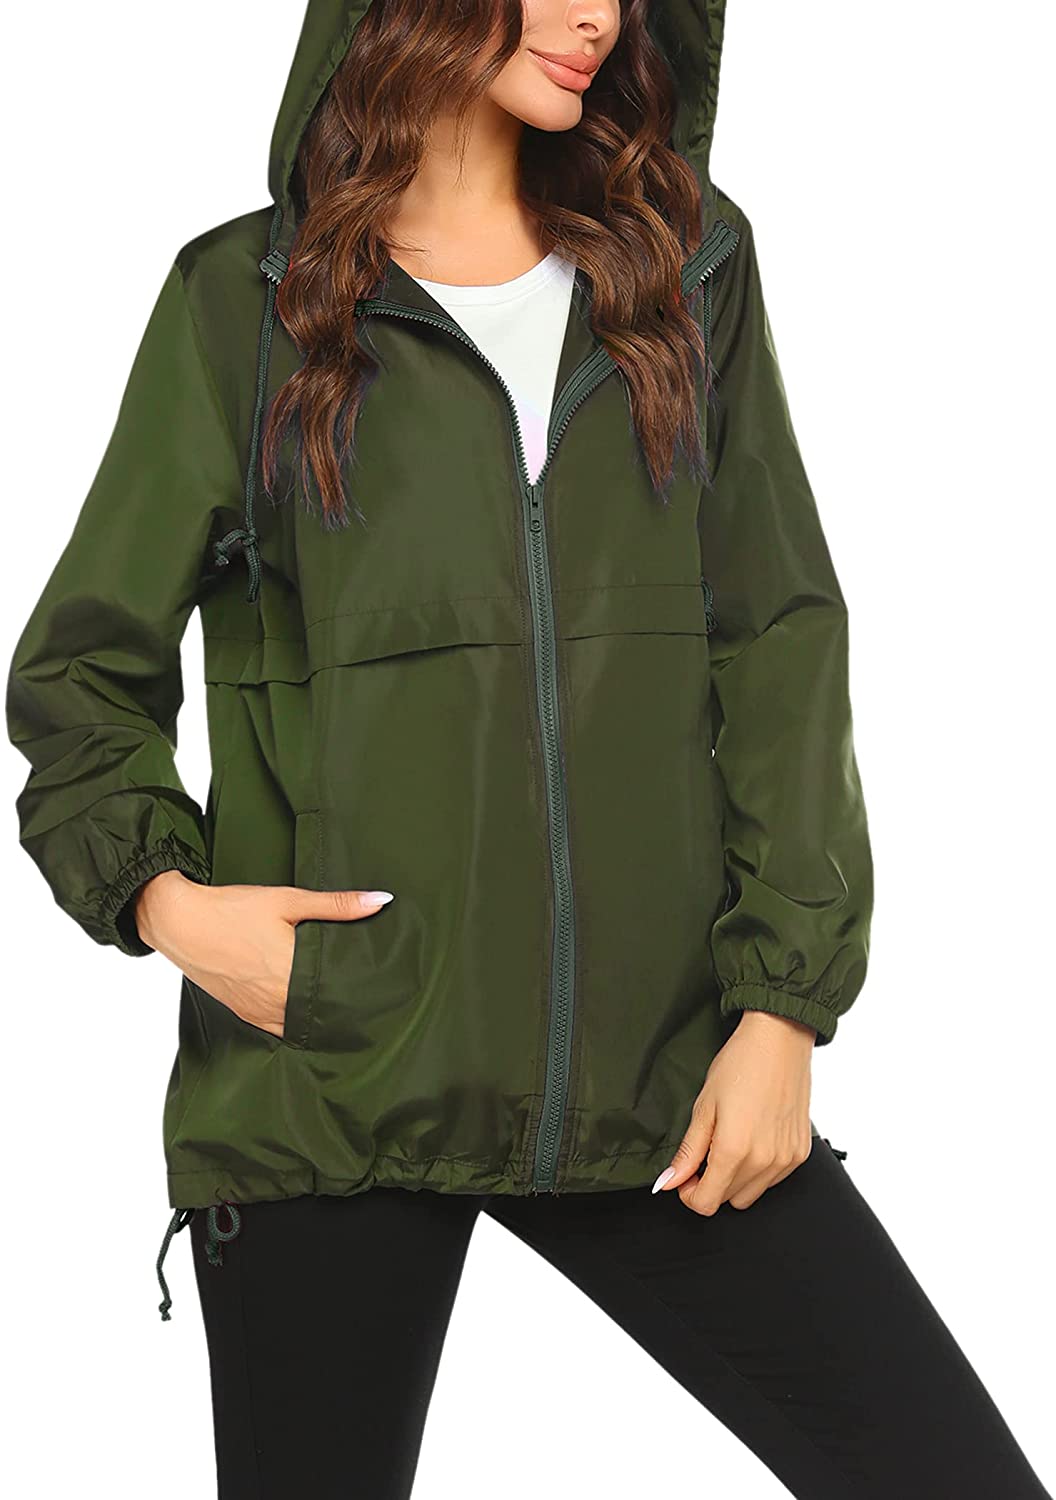 Beyove Womens Waterproof Raincoat Lightweight Rain Jacket Hooded Windbreaker with Pocket for Outdoor